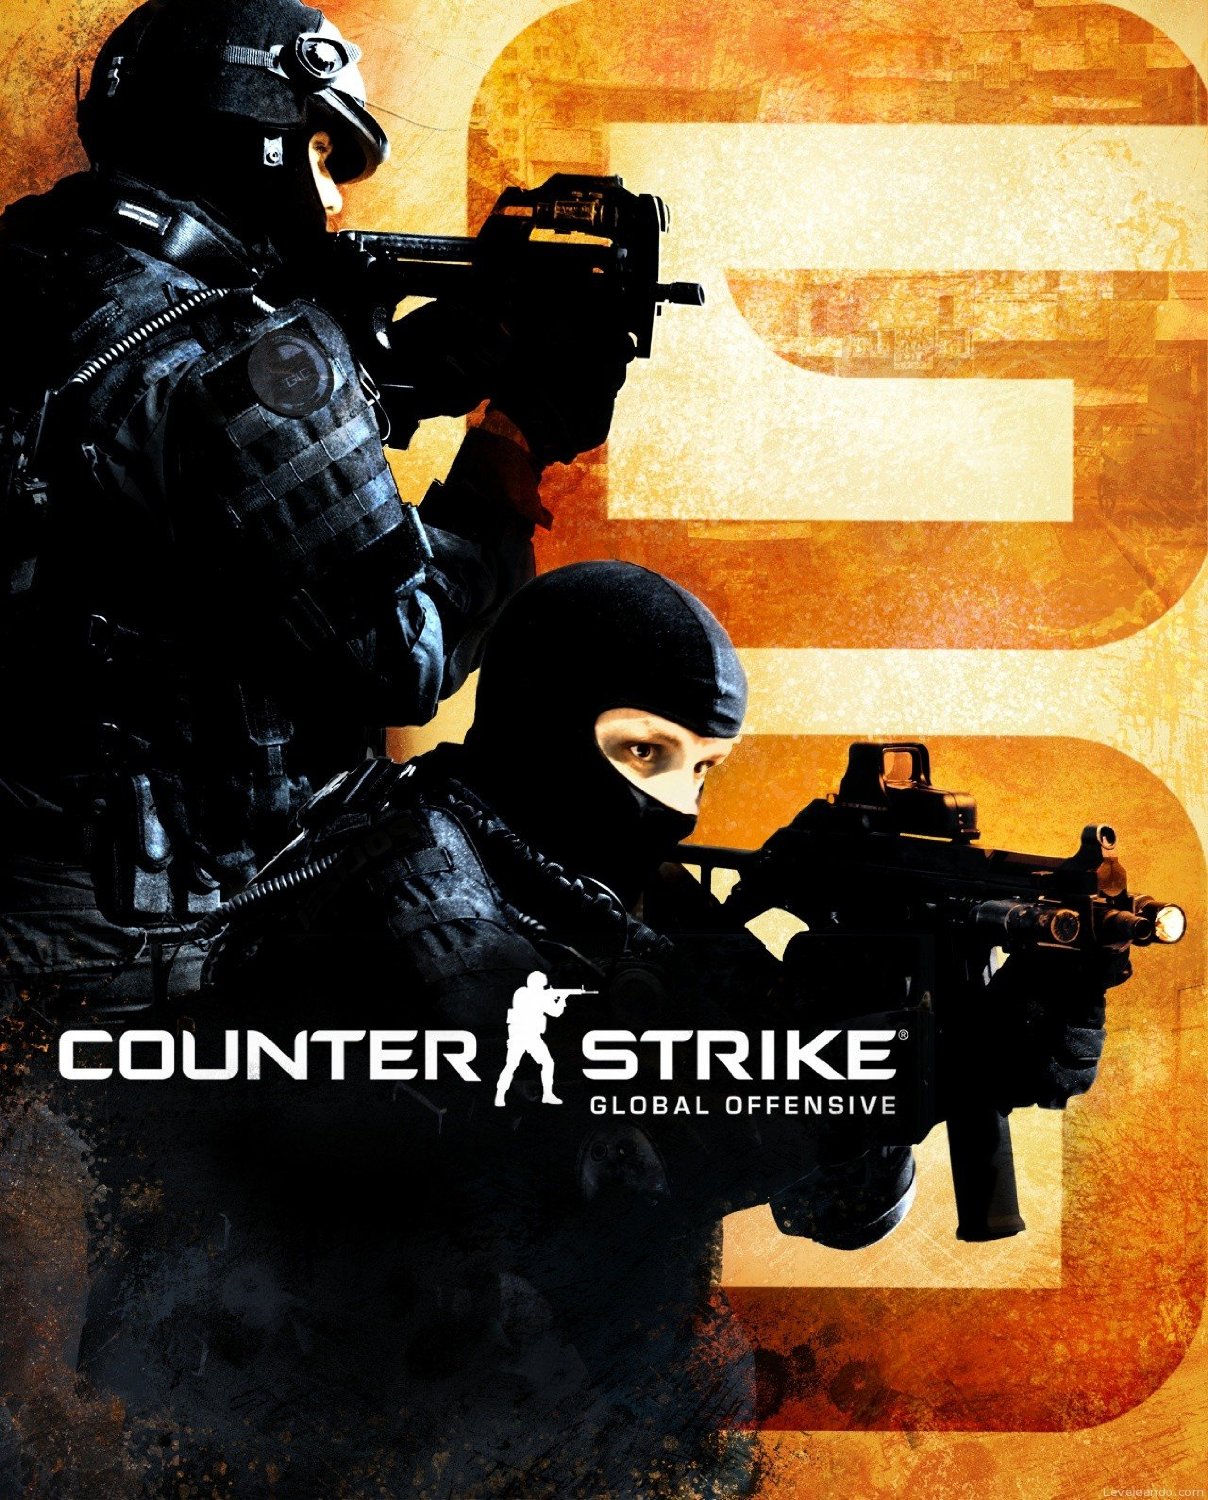 [4share][PC]Counter-Strike Global Offensive v1.35.6.5